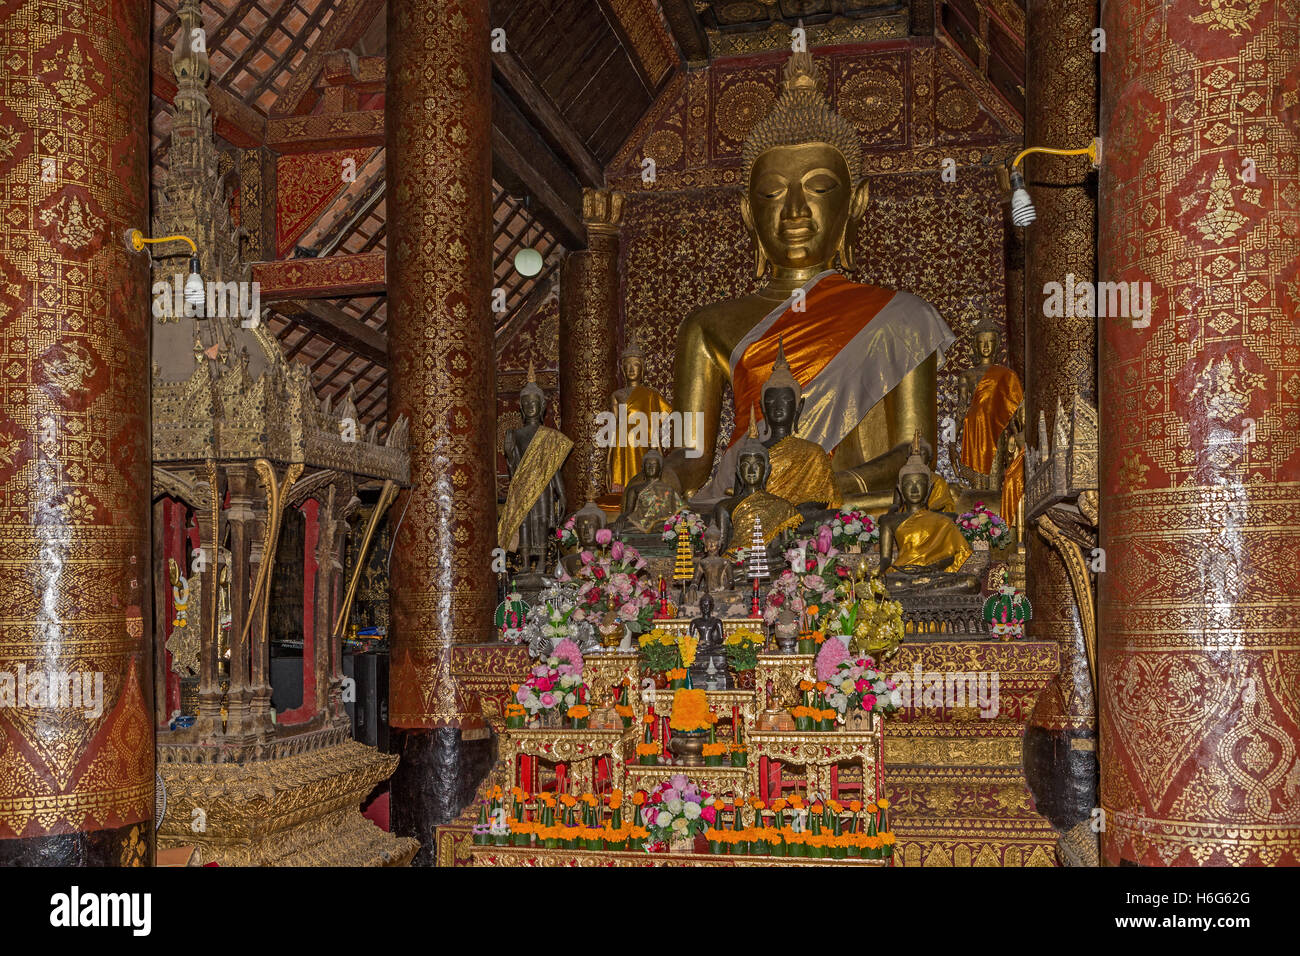 Tempio reale dei Re del Laos, Wat Xieng Thong, Monastero della Città d'Oro, tempio buddista / monastero del Laos, Luang Prabang, Laos Foto Stock